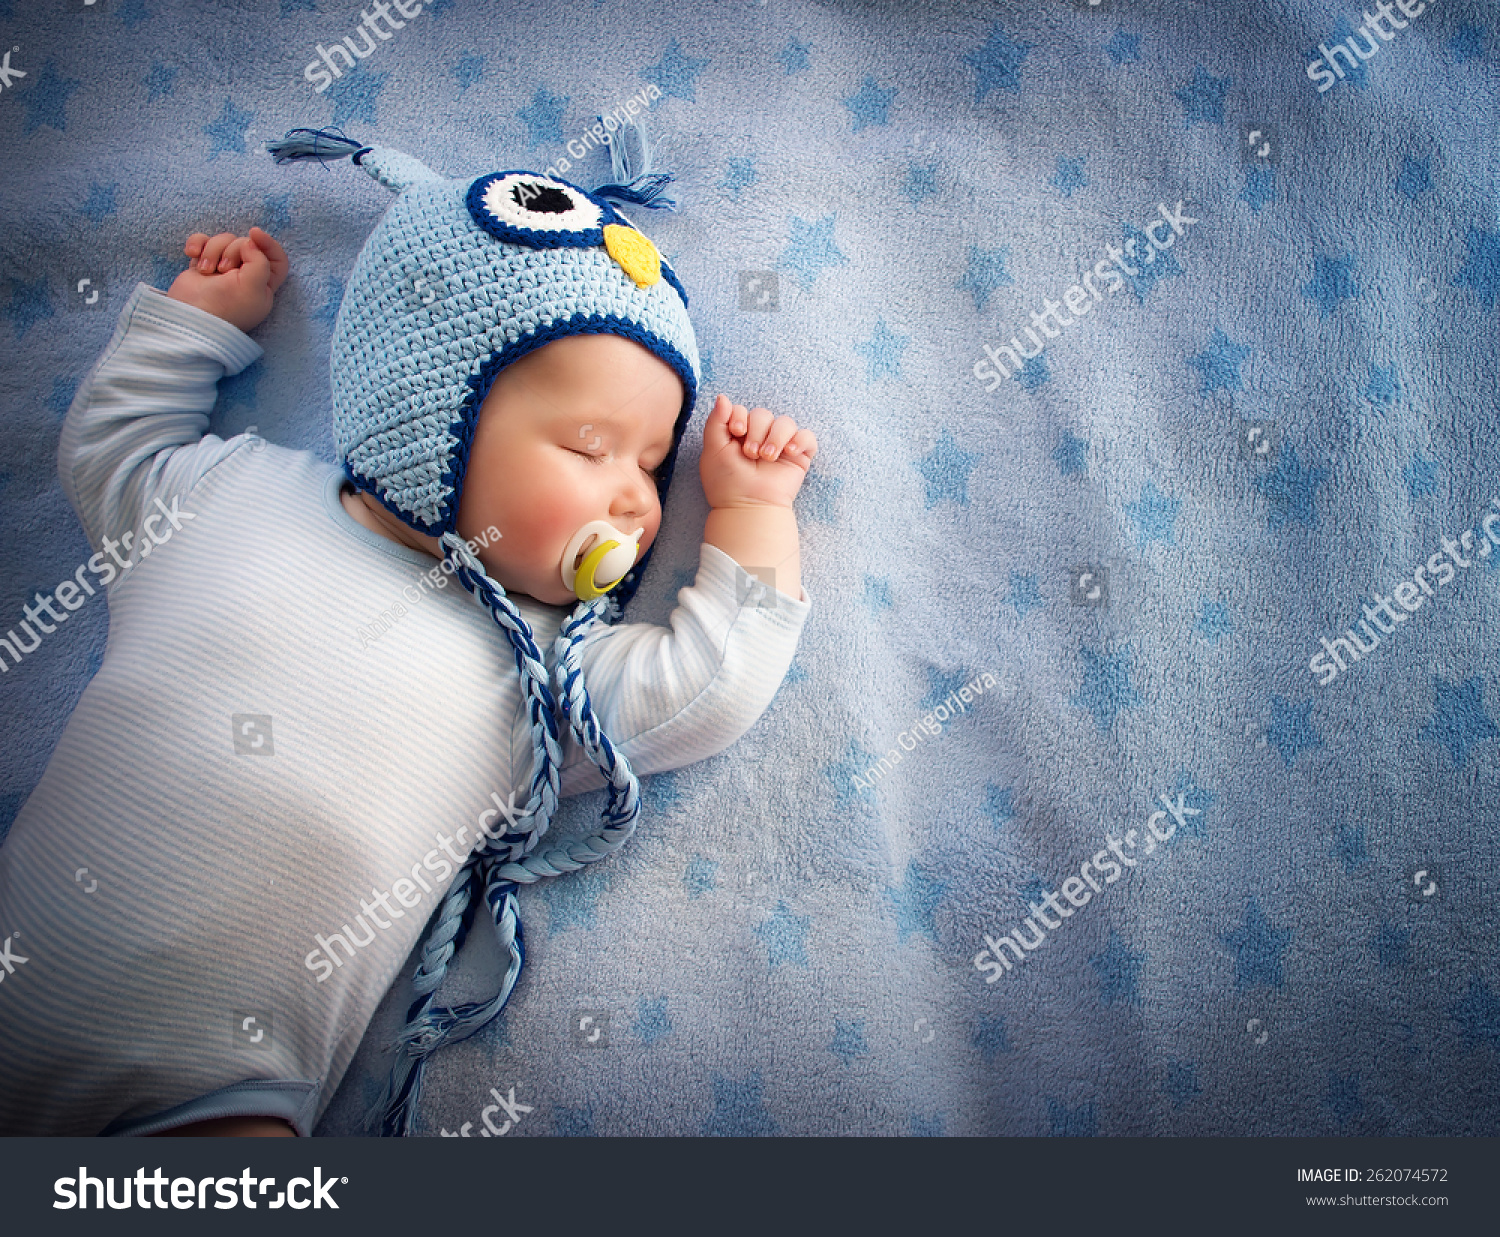 4 month old baby in owl hat sleeping on blue blanket #262074572